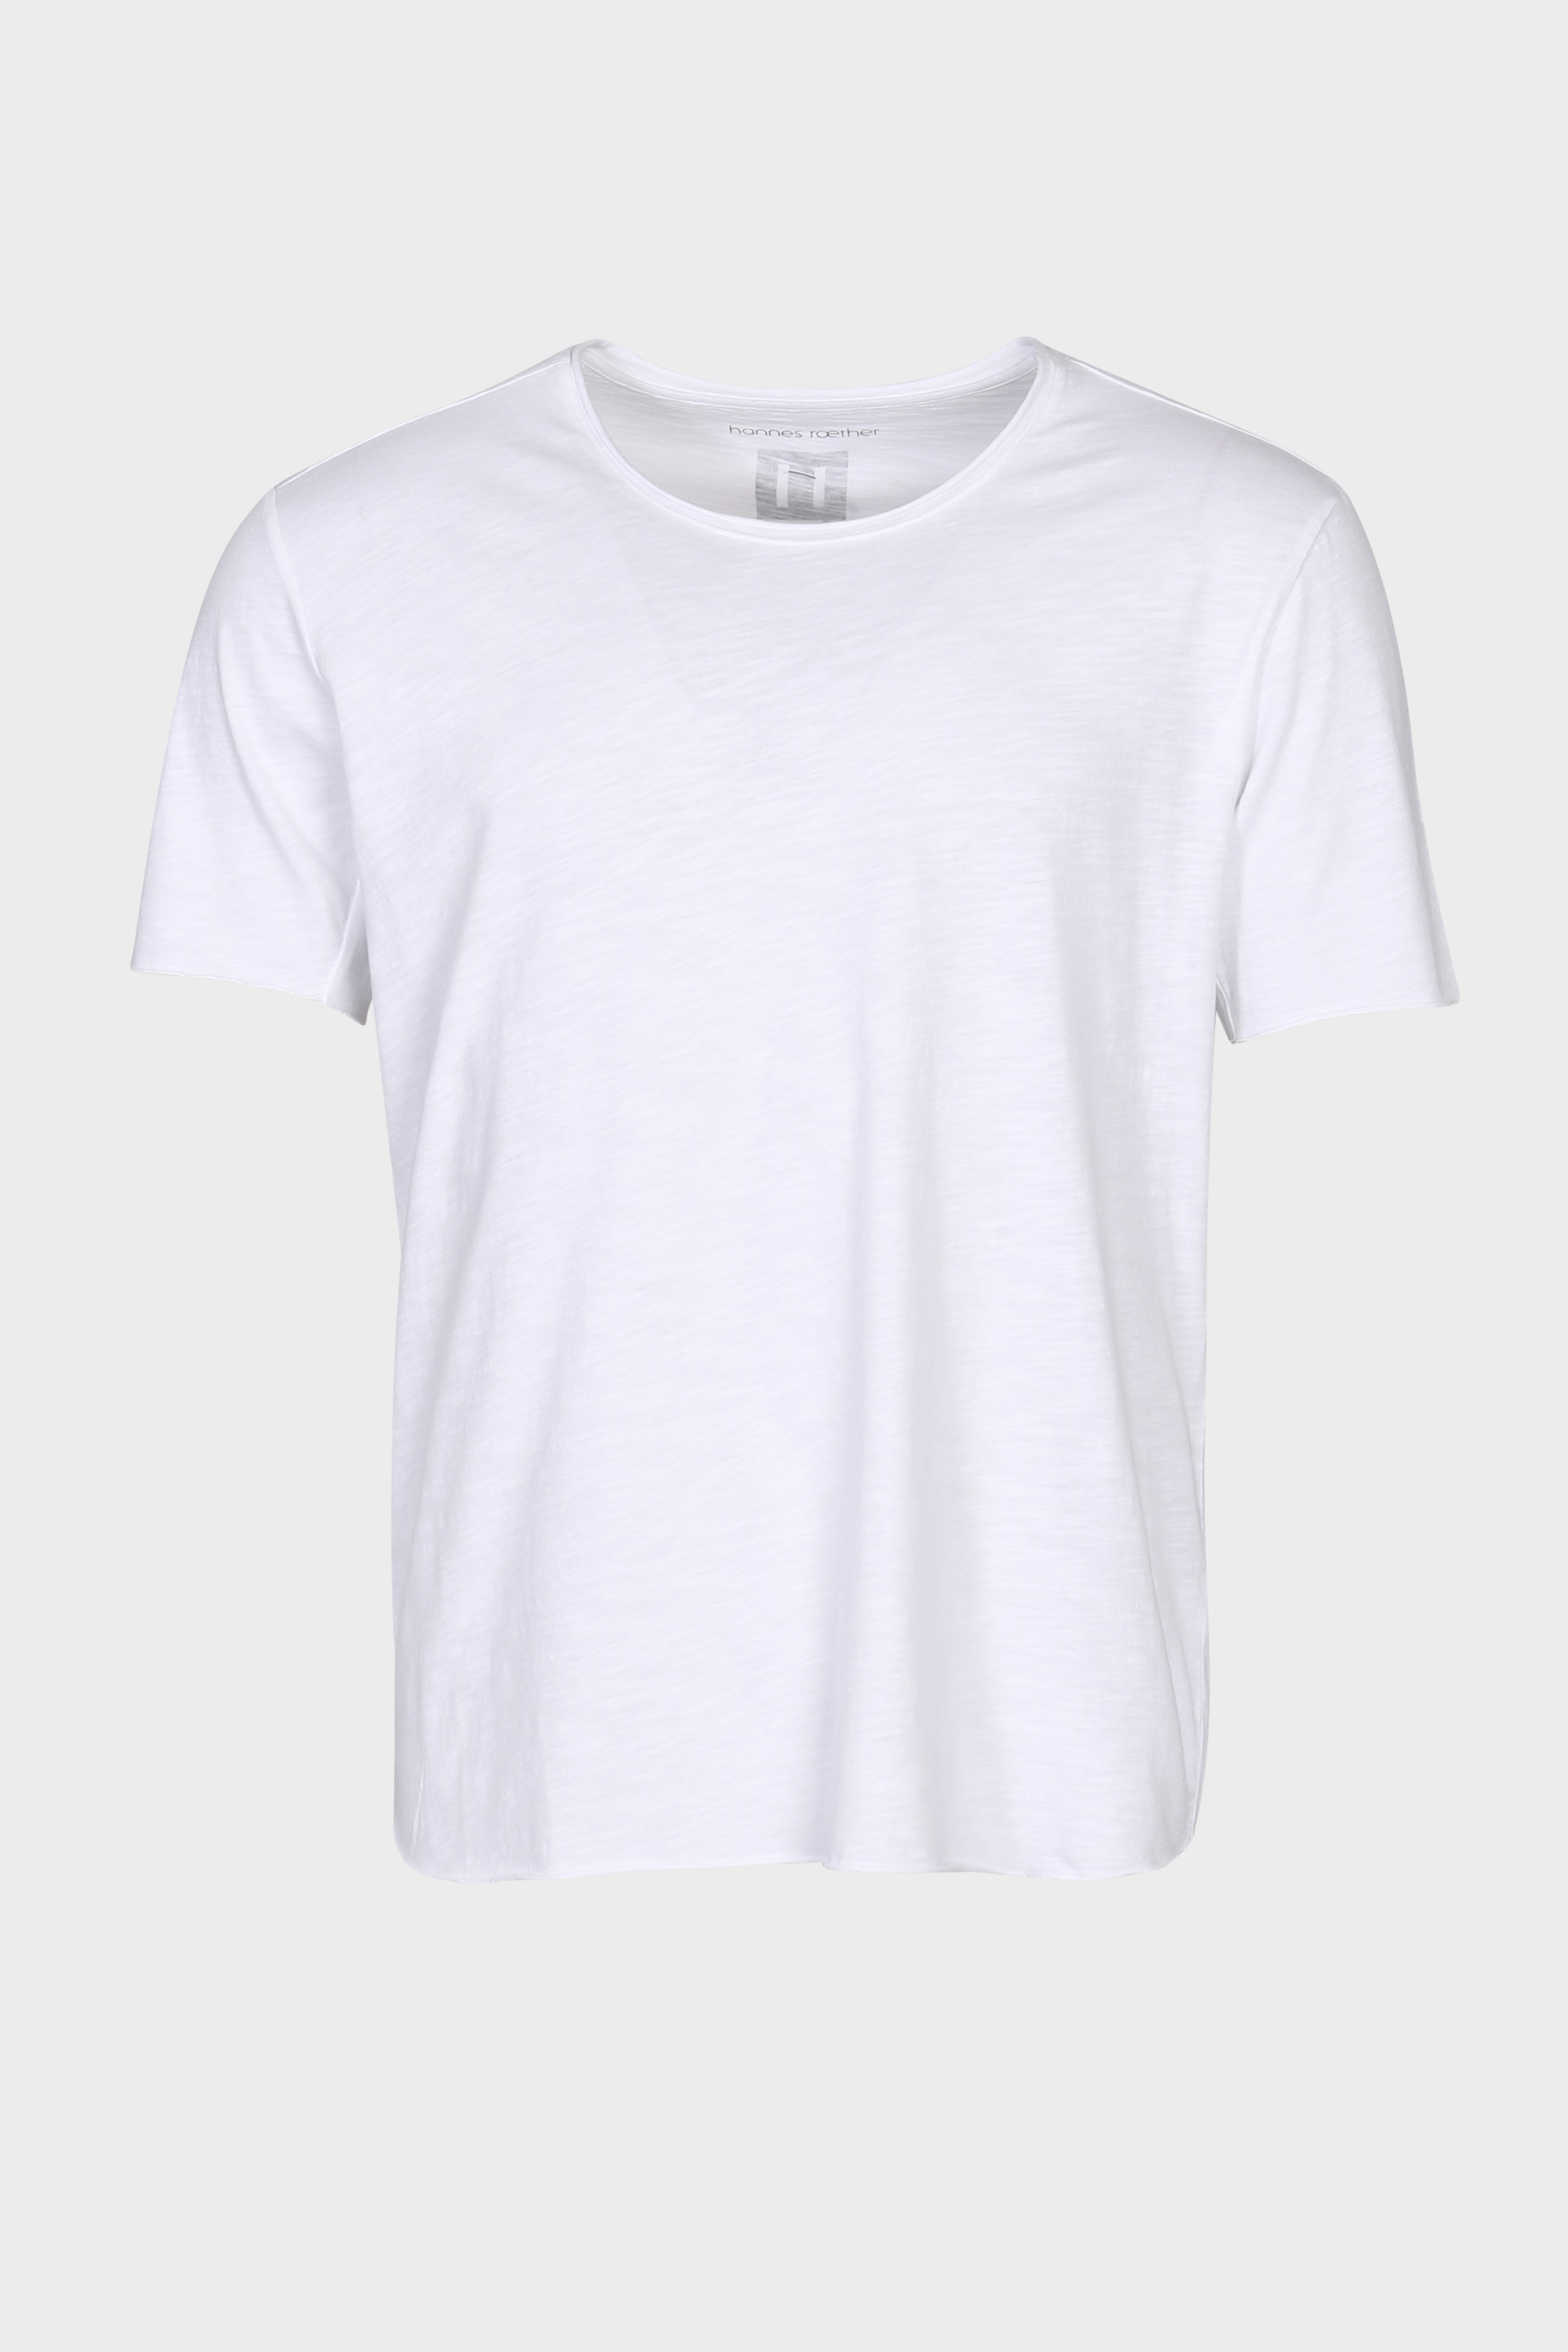 HANNES ROETHER Slub Yersey T-Shirt in White L